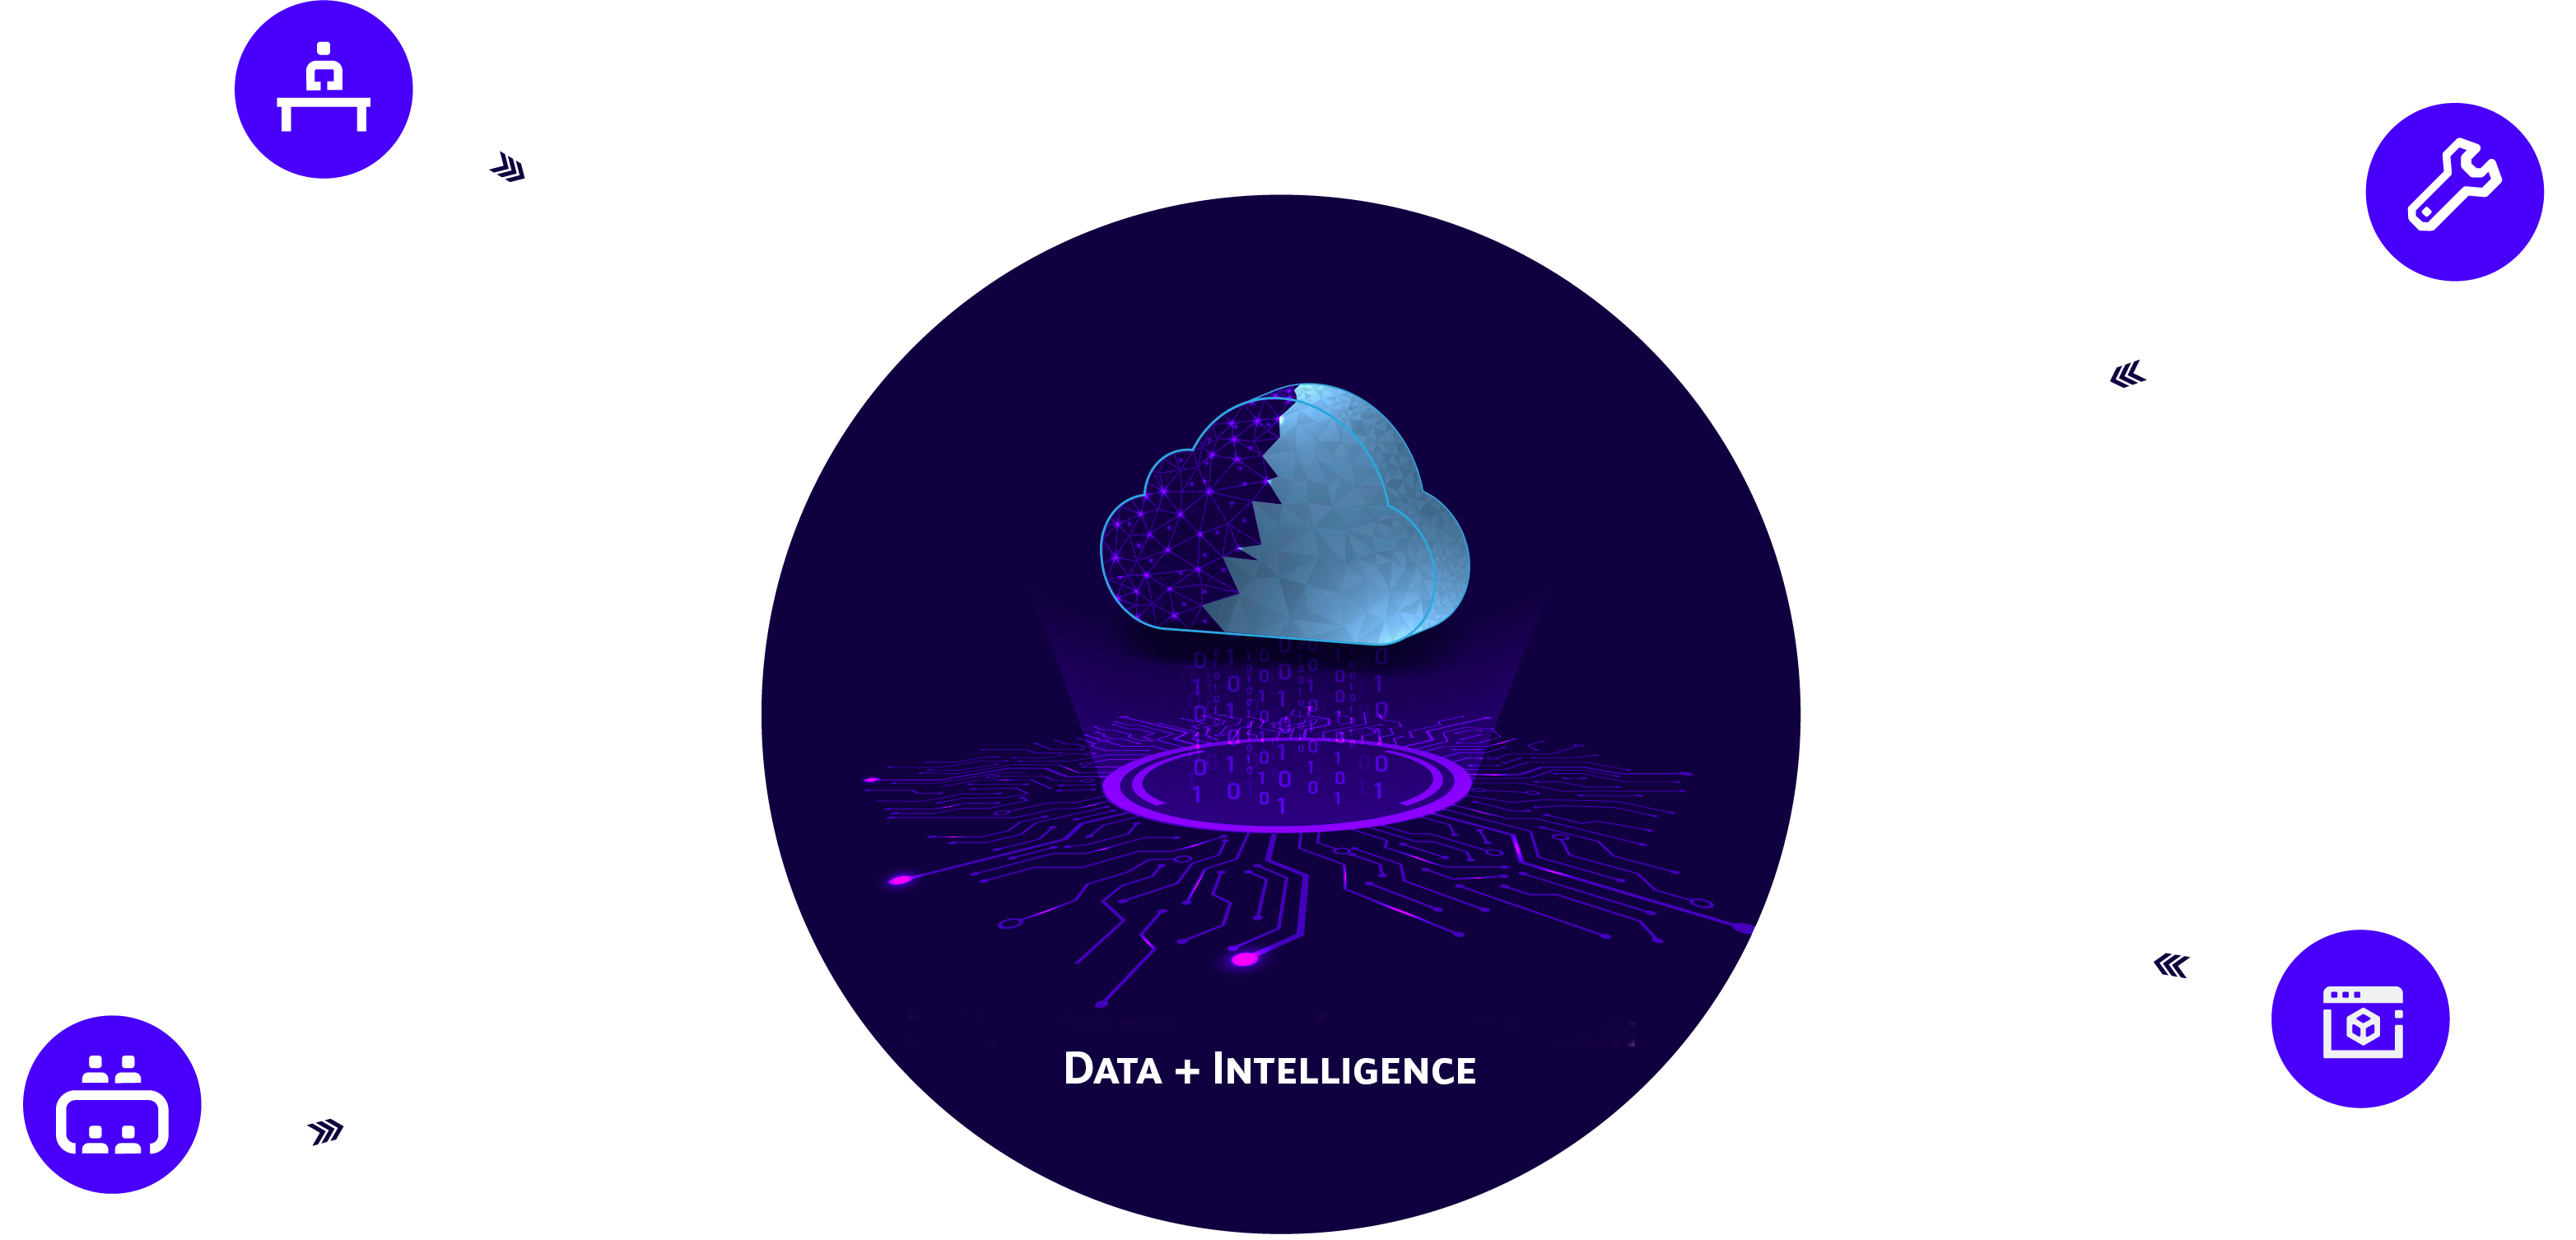 Data + Intelligence